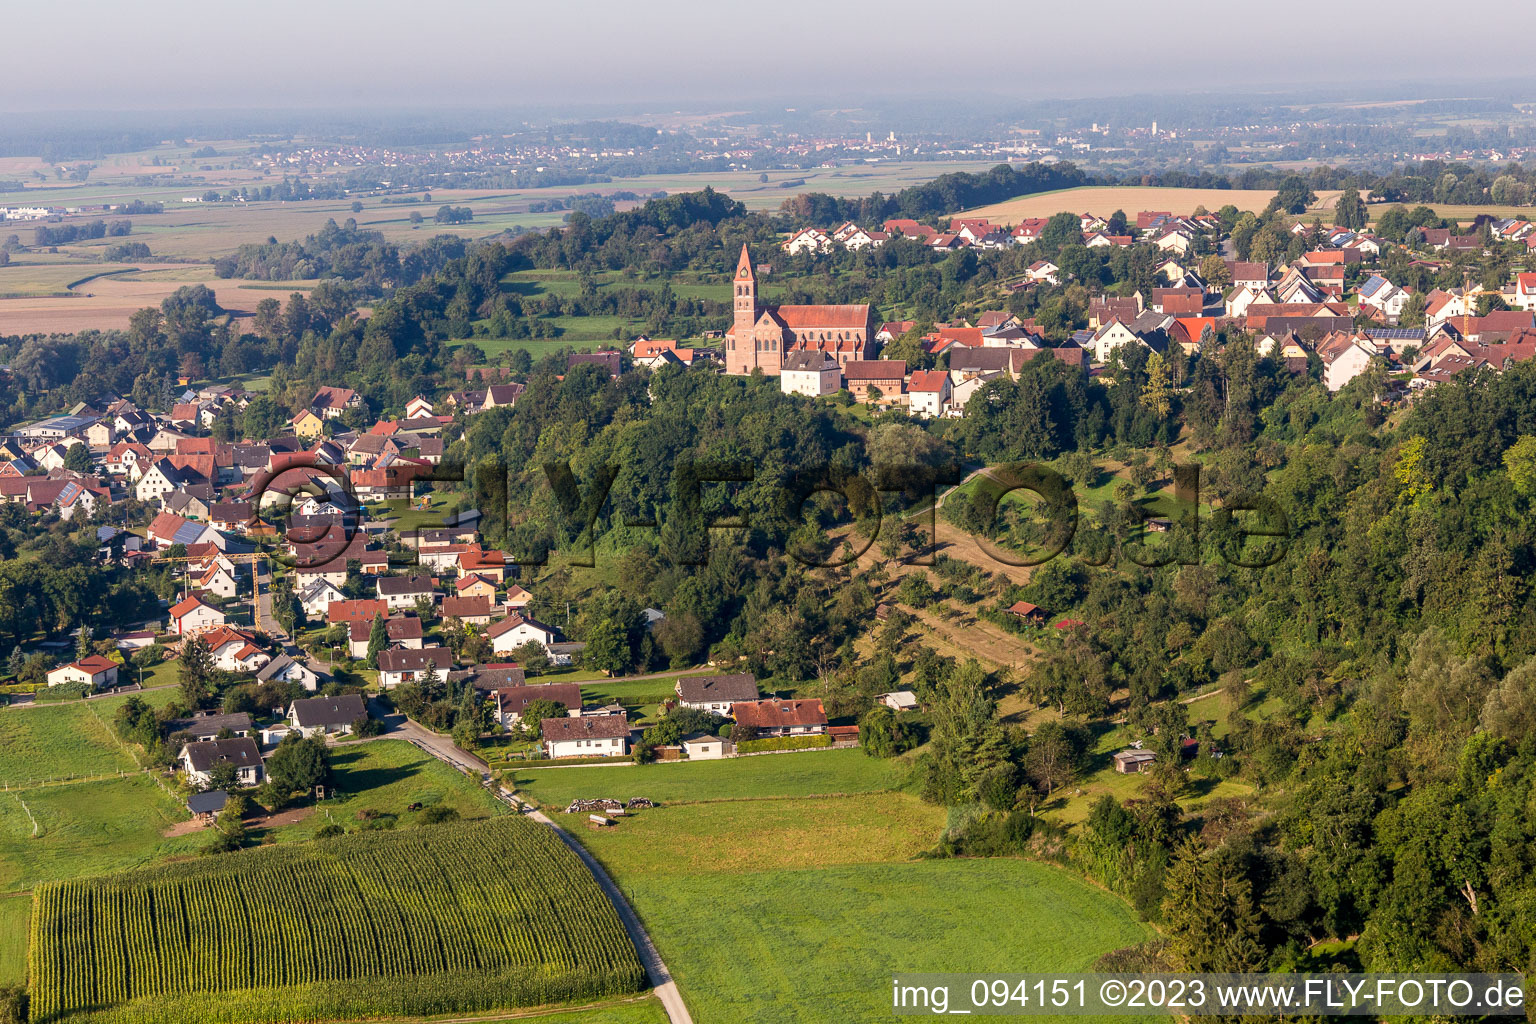 Hundersingen dans le département Bade-Wurtemberg, Allemagne vue d'en haut